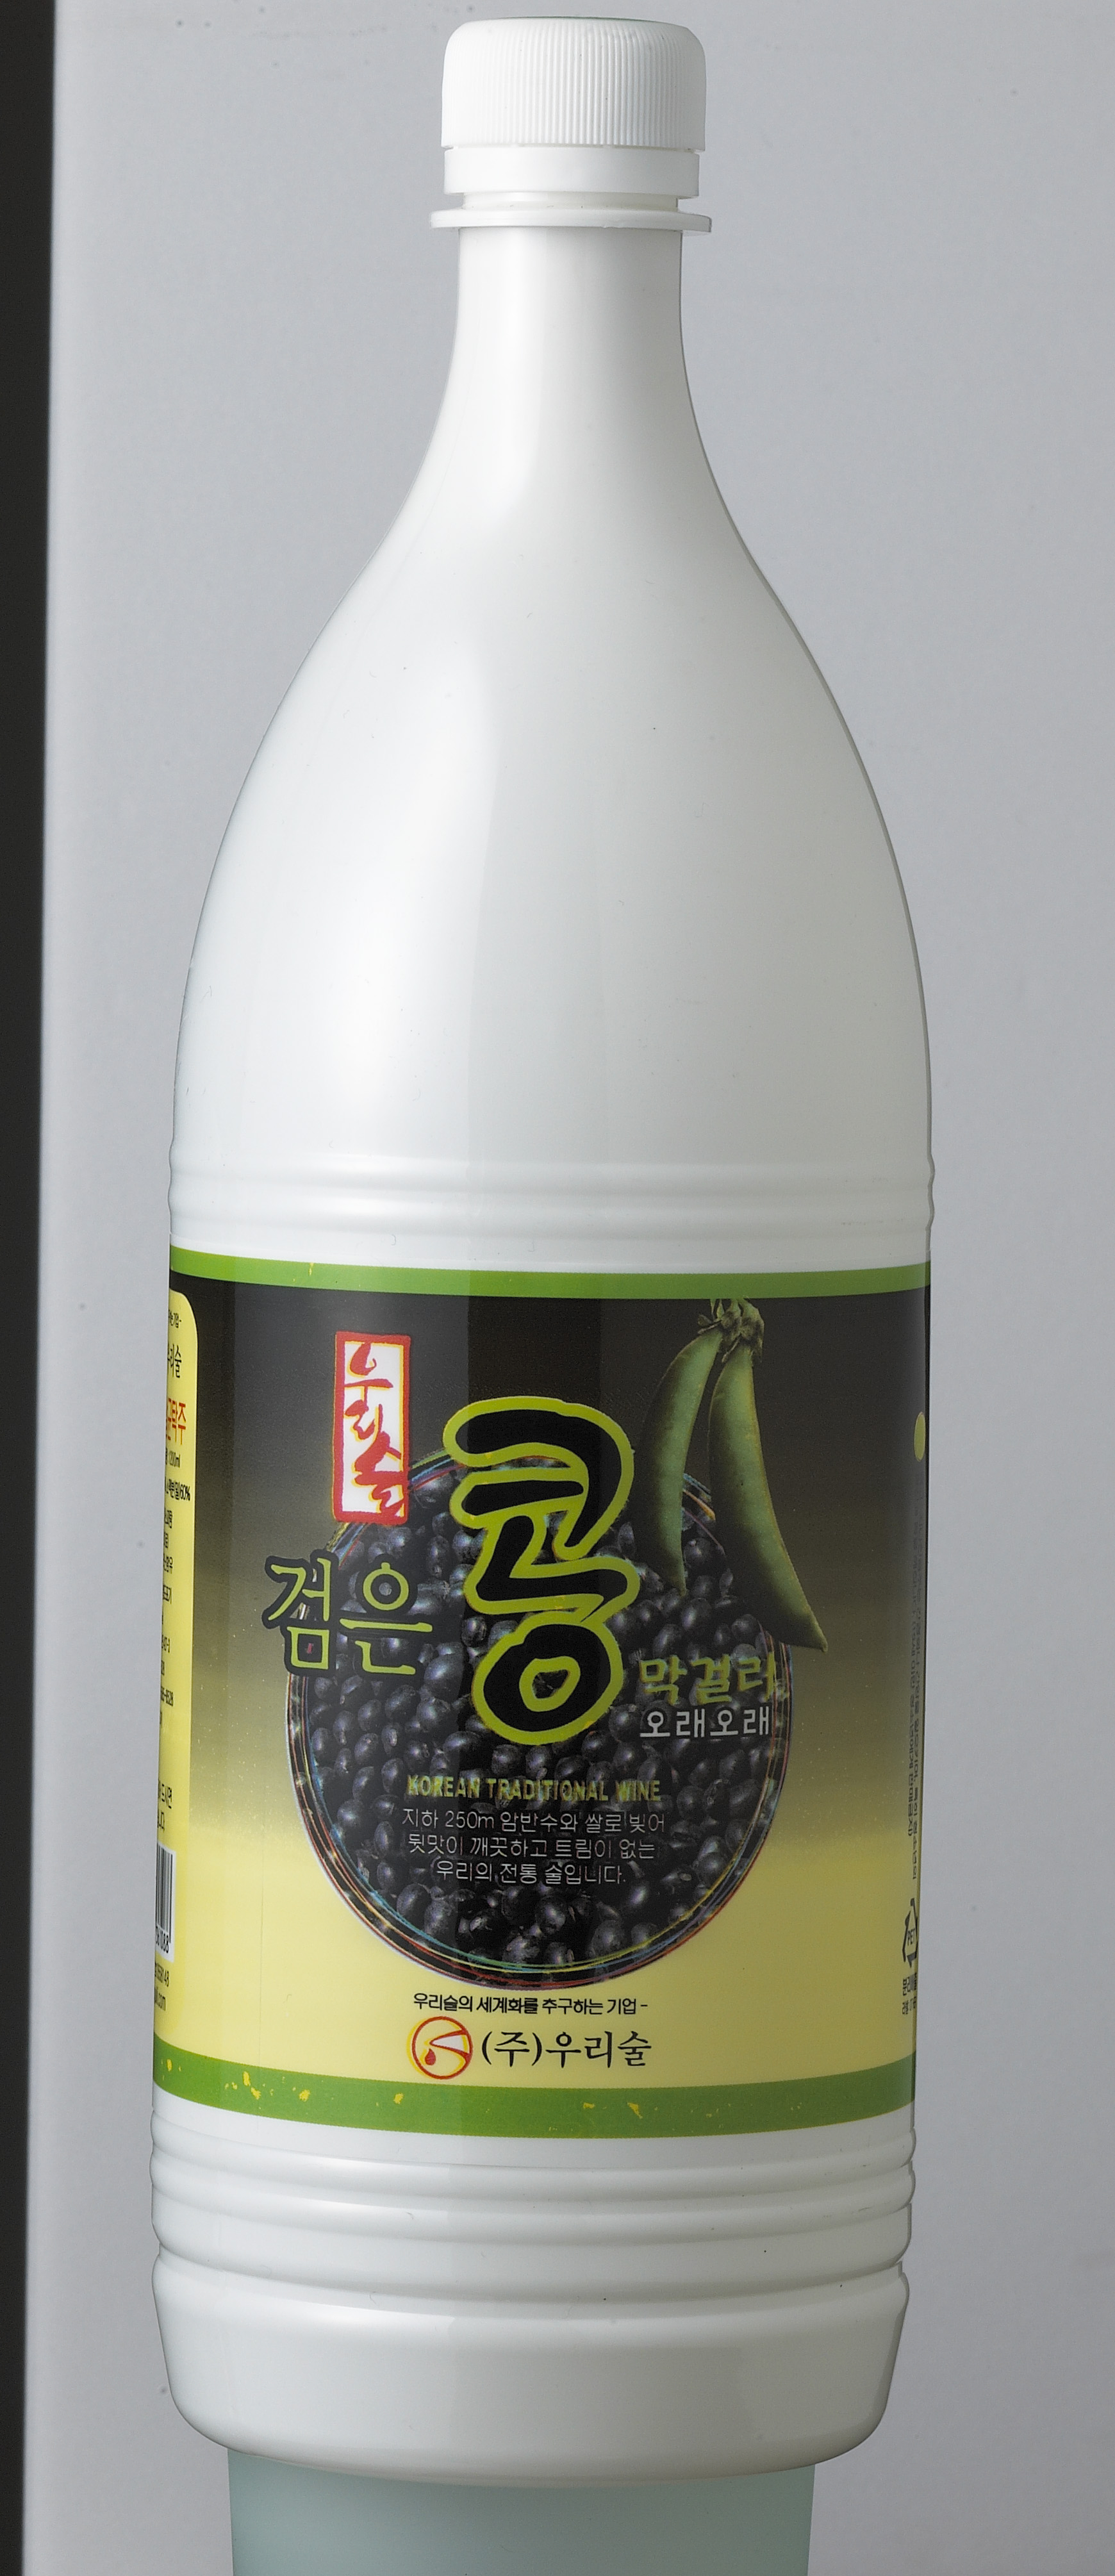 black been rice wine(1,200 ml) Made in Korea